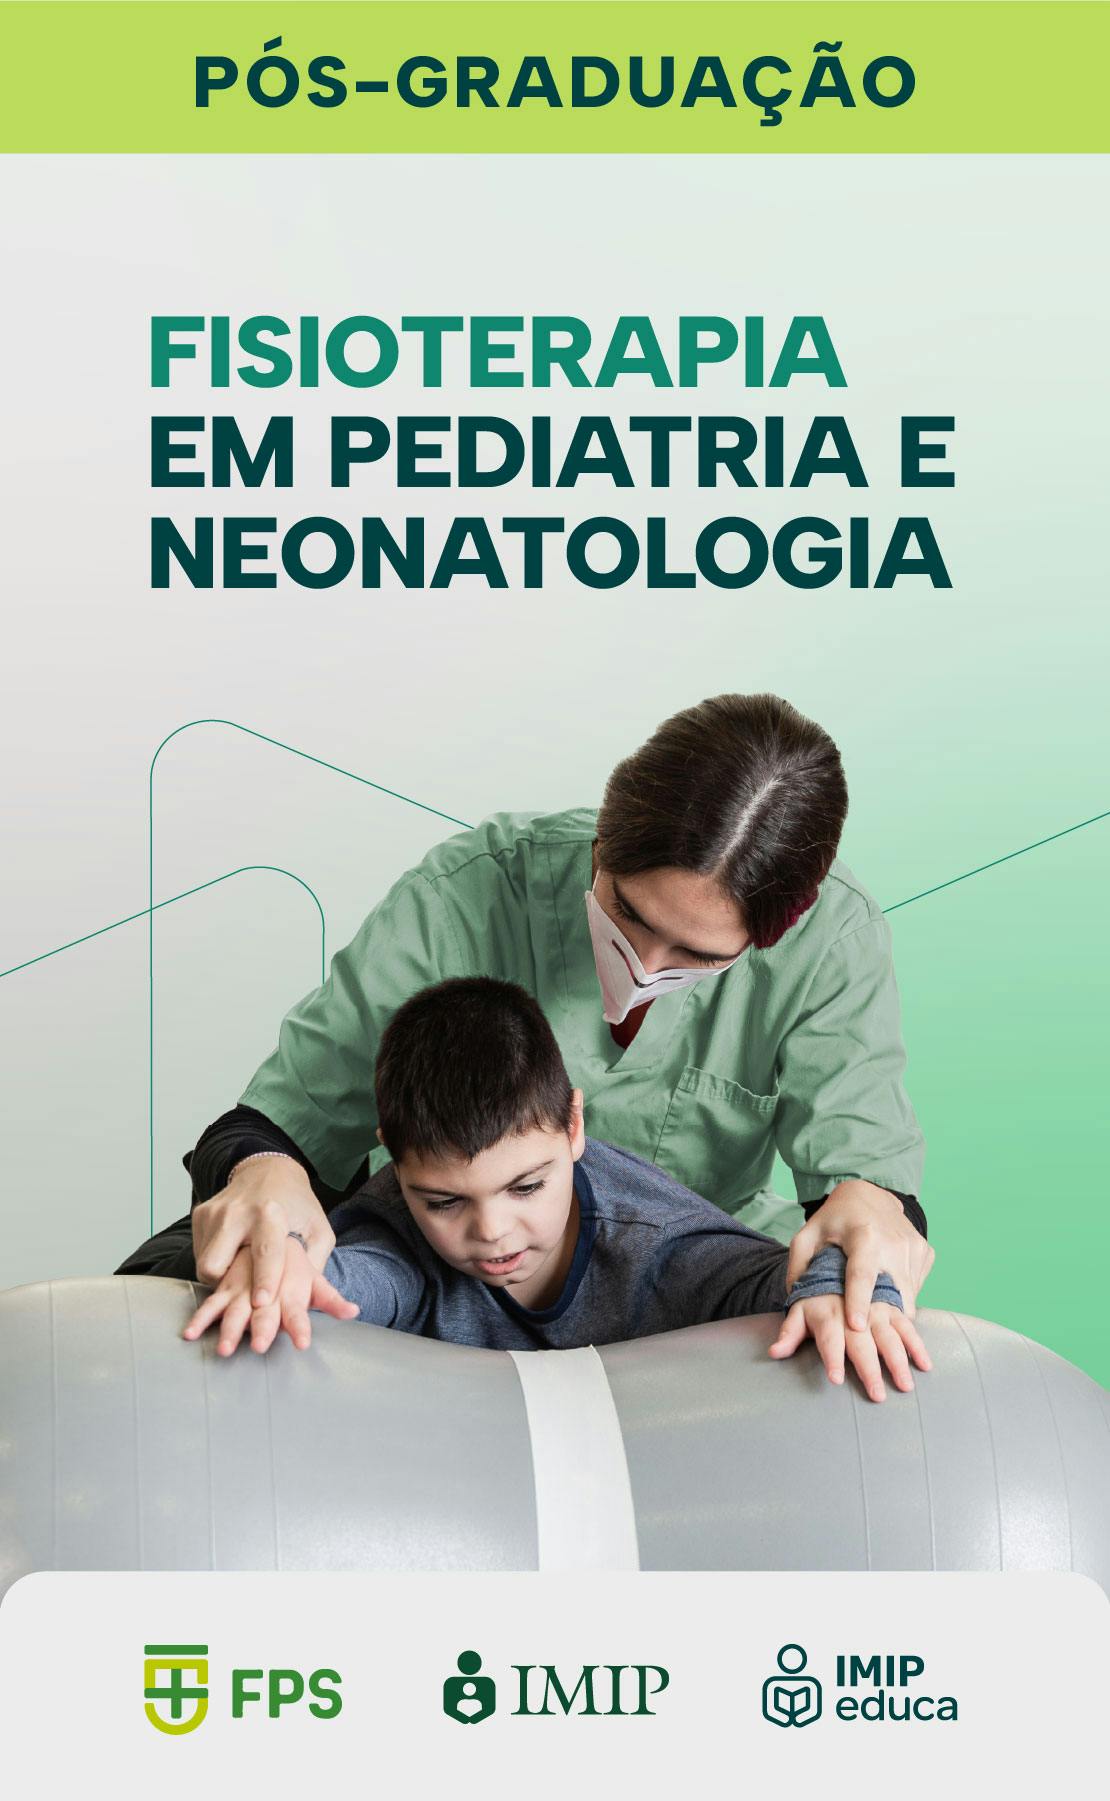 Fisioterapia em Pediatria e Neonatologia